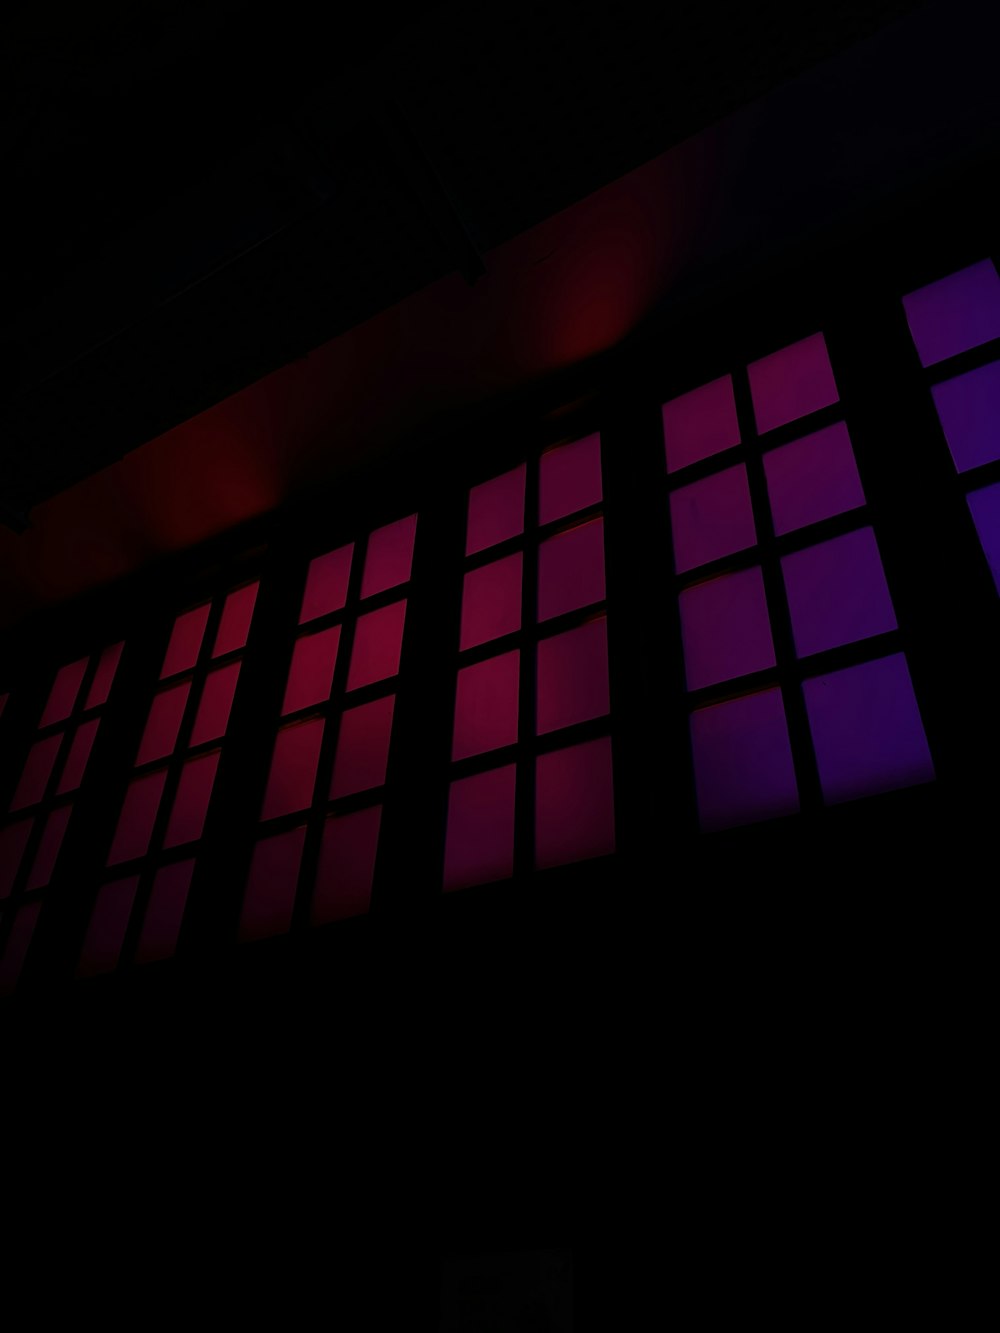 a window with a dark background